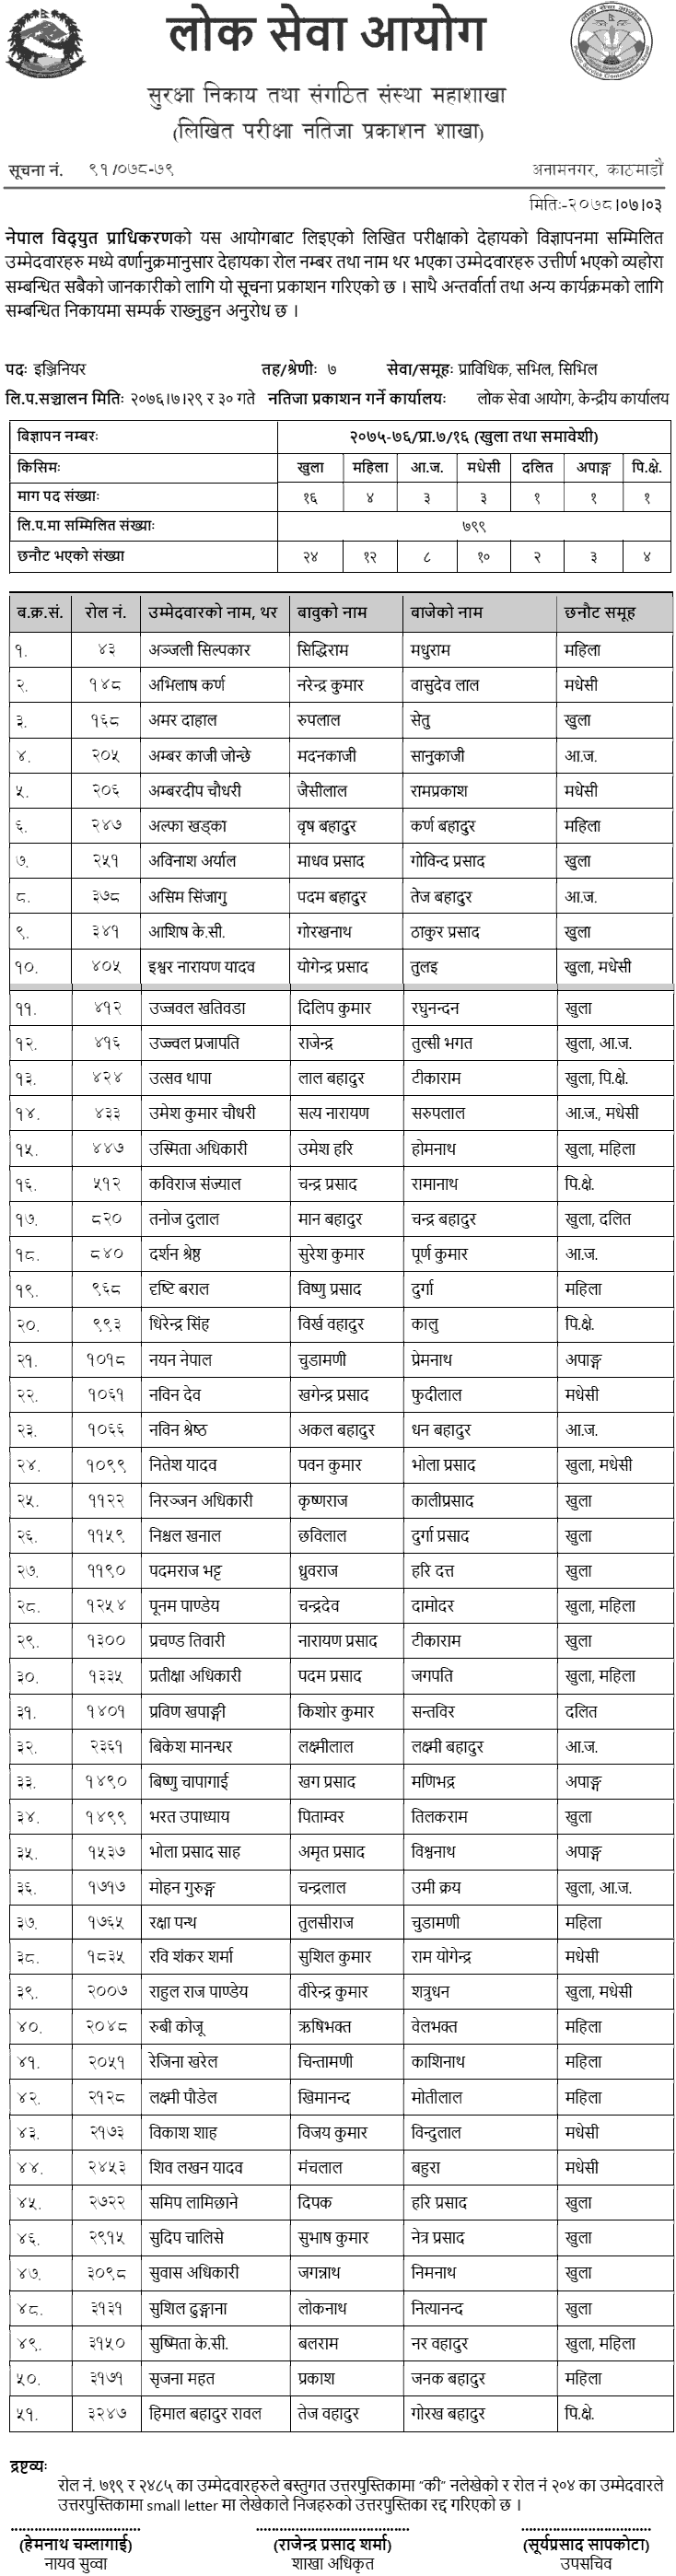 Nepal Electricity Authority (NEA) Written Exam Result of Engineer (Civil, Computer, Survey, Geologist)